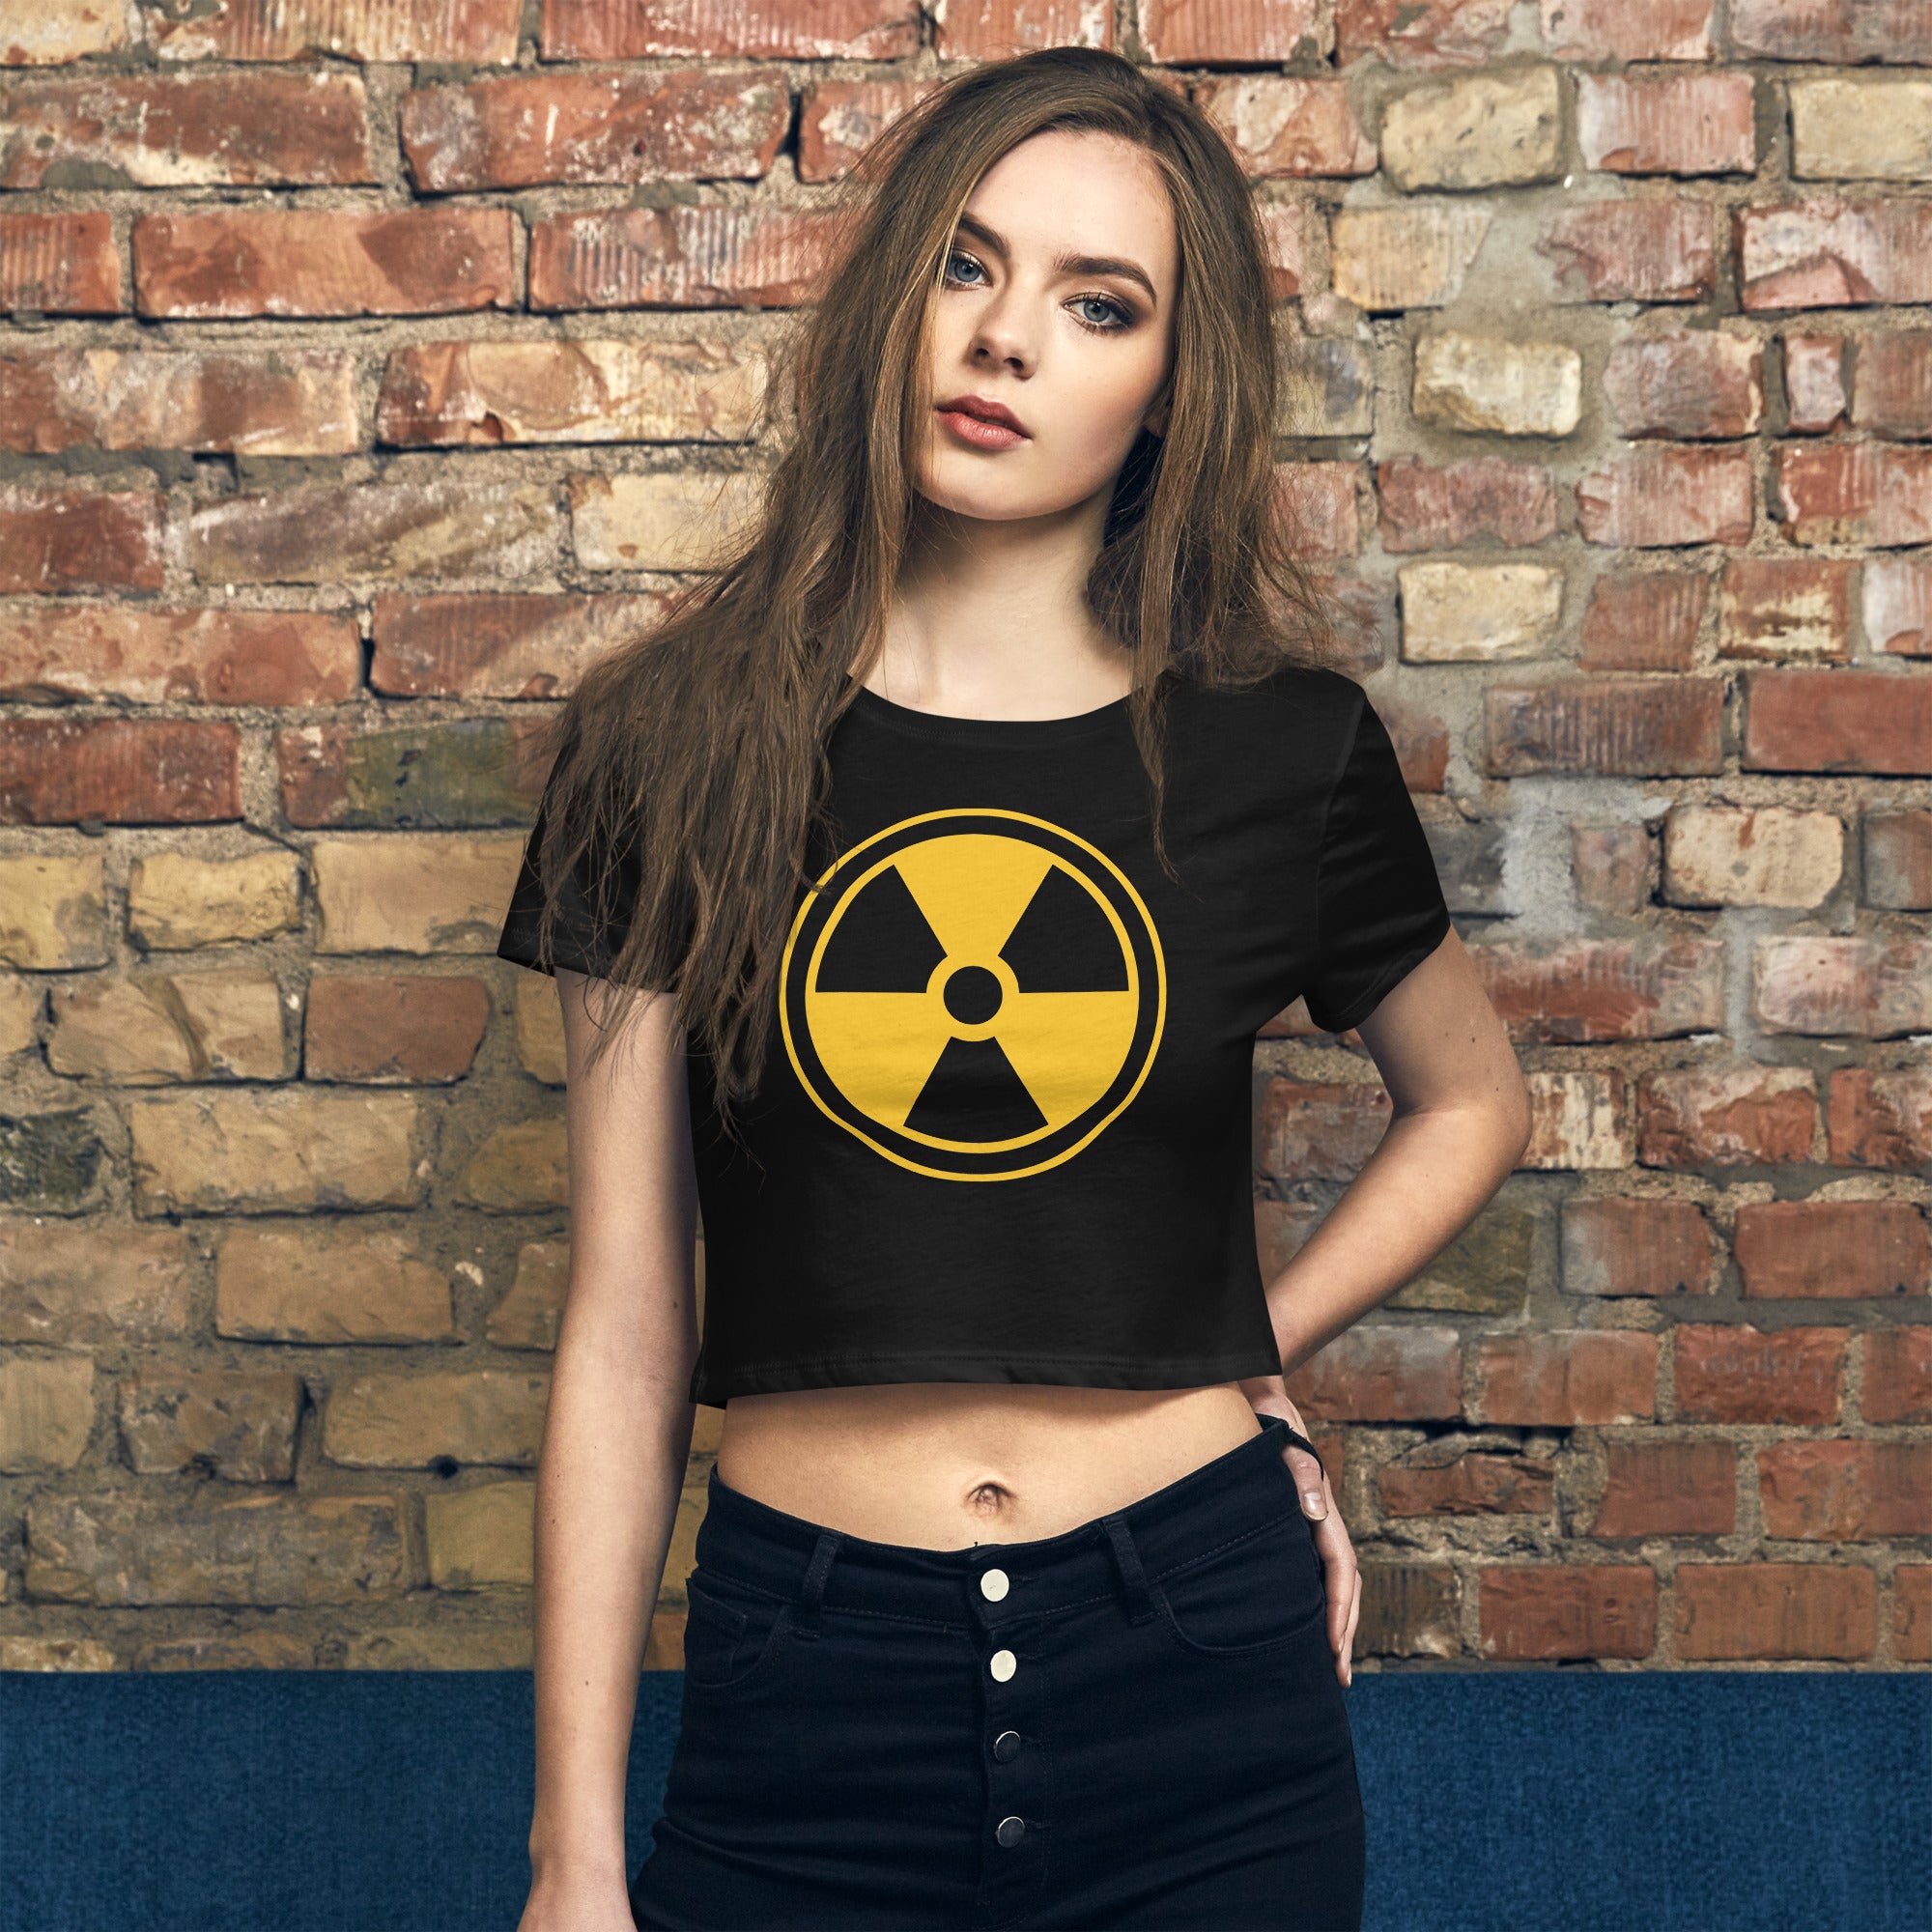 Yellow Radioactive Radiation Warning Sign Women’s Crop Tee